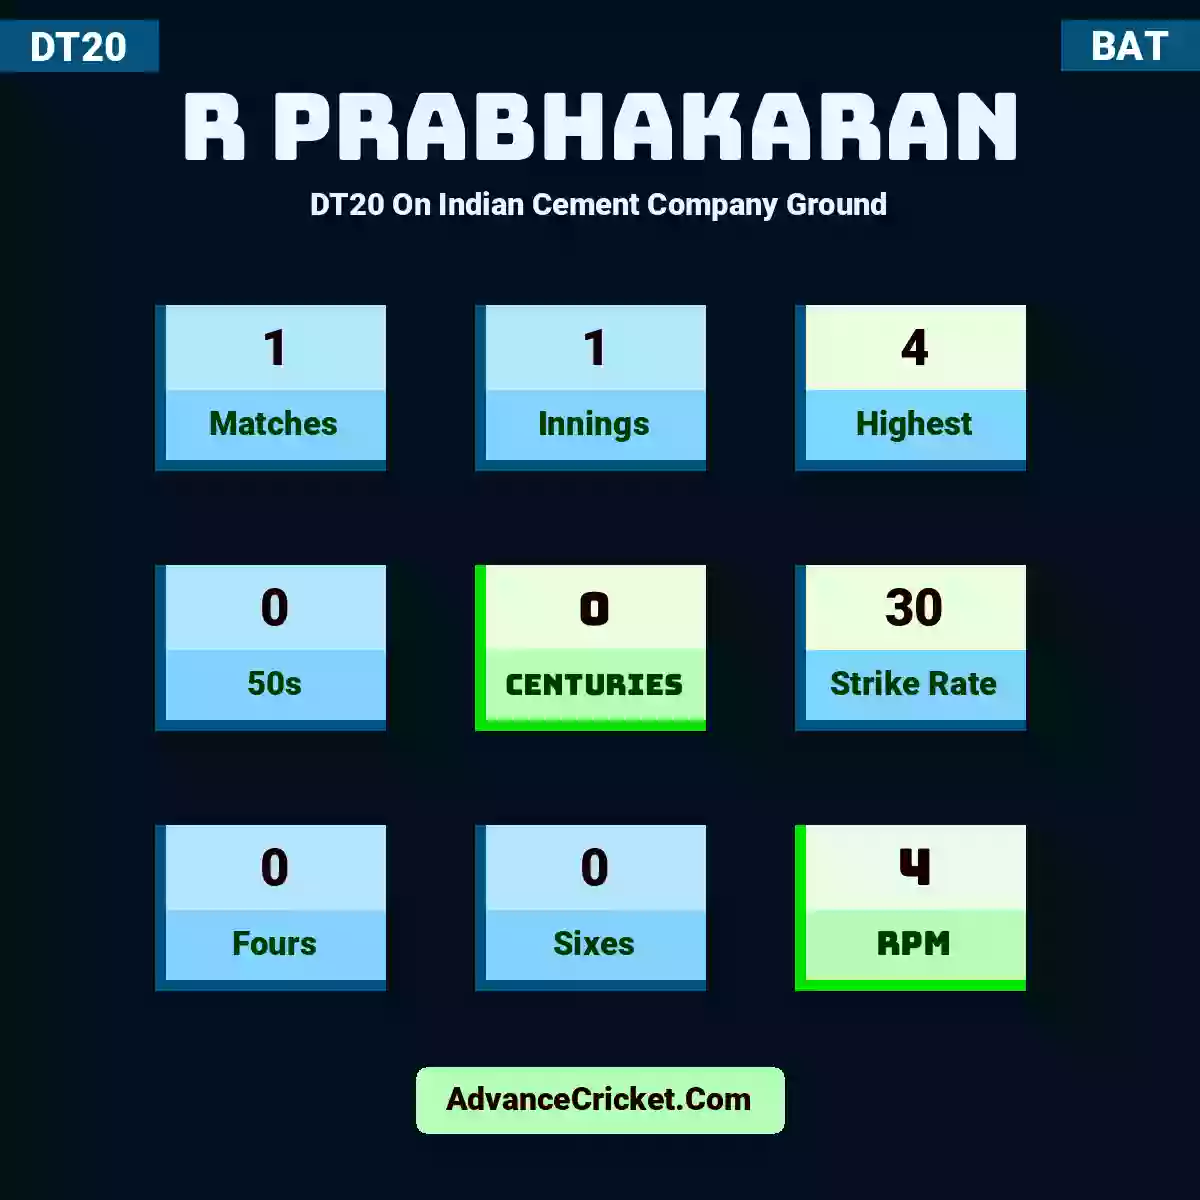 R Prabhakaran DT20  On Indian Cement Company Ground, R Prabhakaran played 1 matches, scored 4 runs as highest, 0 half-centuries, and 0 centuries, with a strike rate of 30. R.Prabhakaran hit 0 fours and 0 sixes, with an RPM of 4.